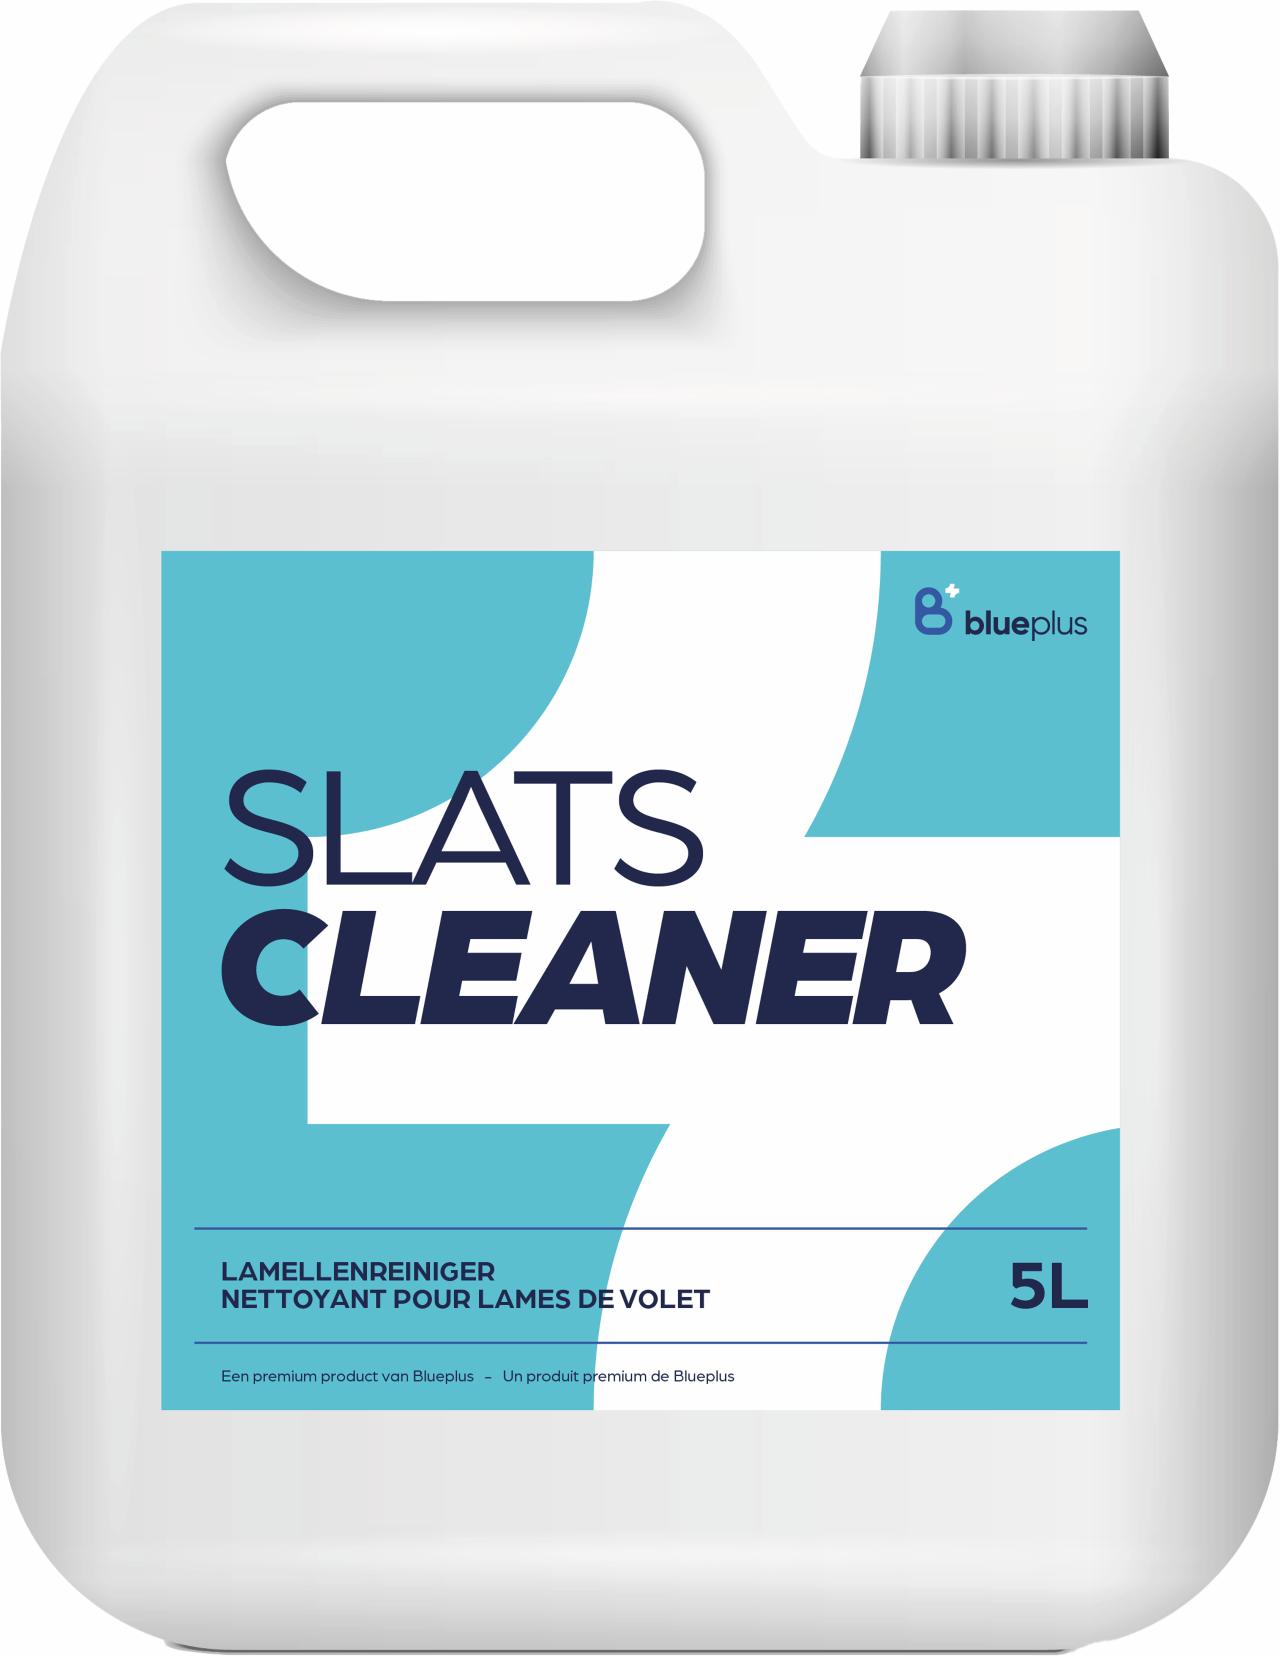 blueplus Slats Cleaner